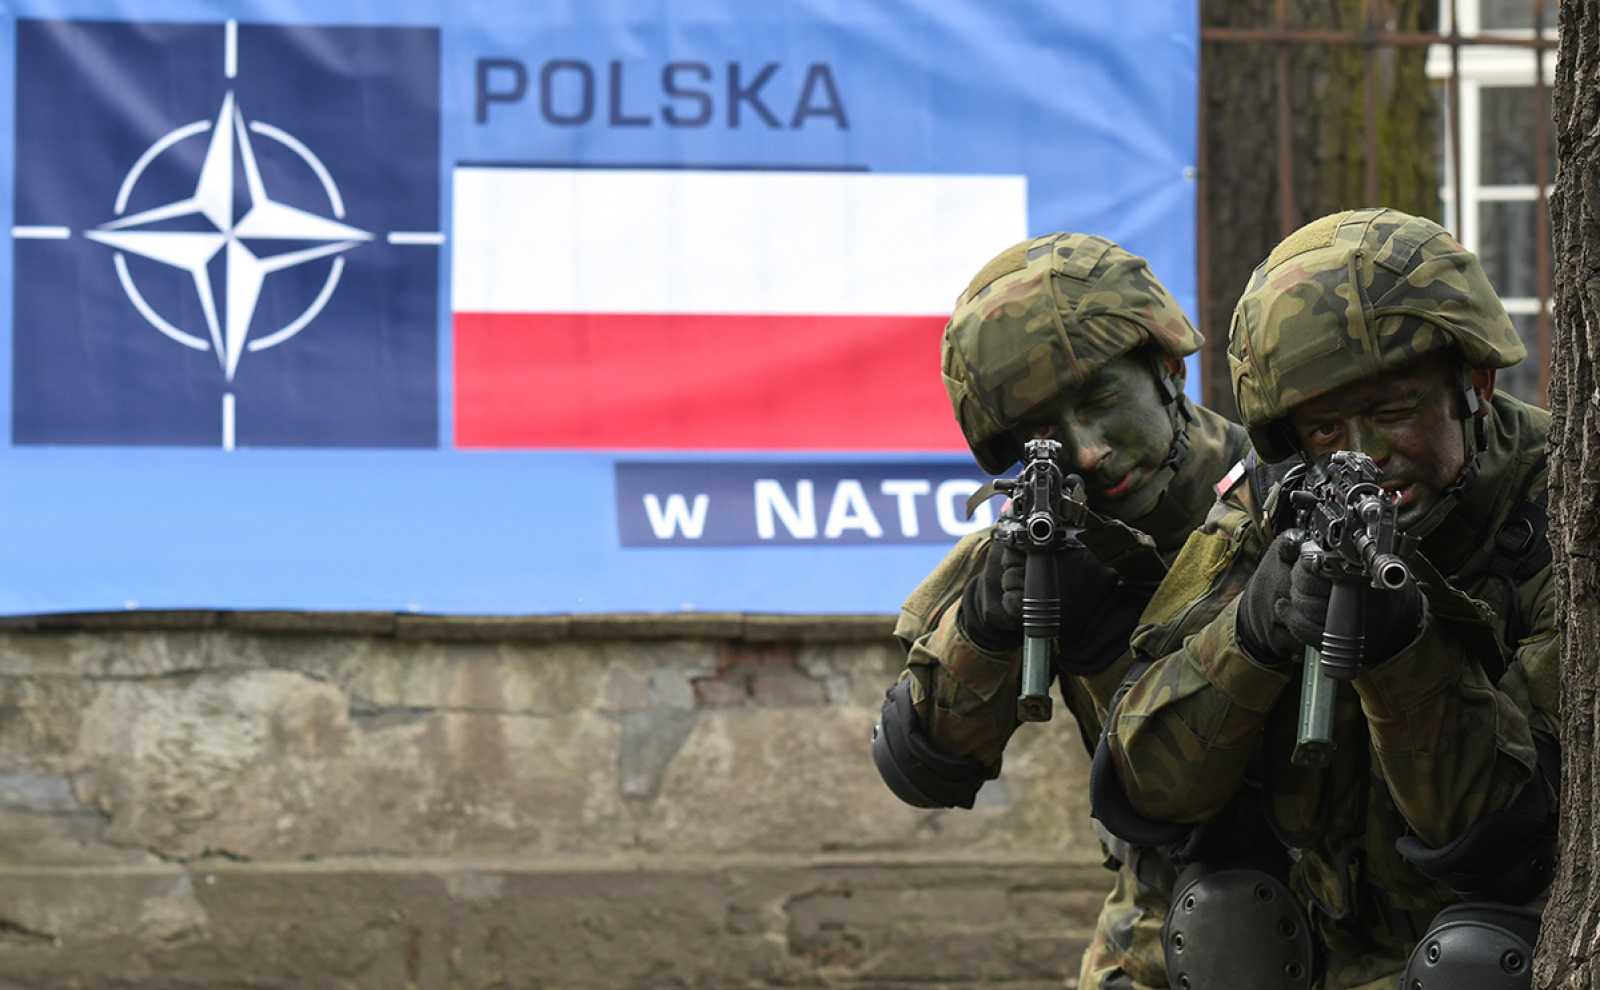 Нато не станет. Учения НАТО В Польше. База НАТО В Польше. Украинский спецназ. Польша США НАТО.